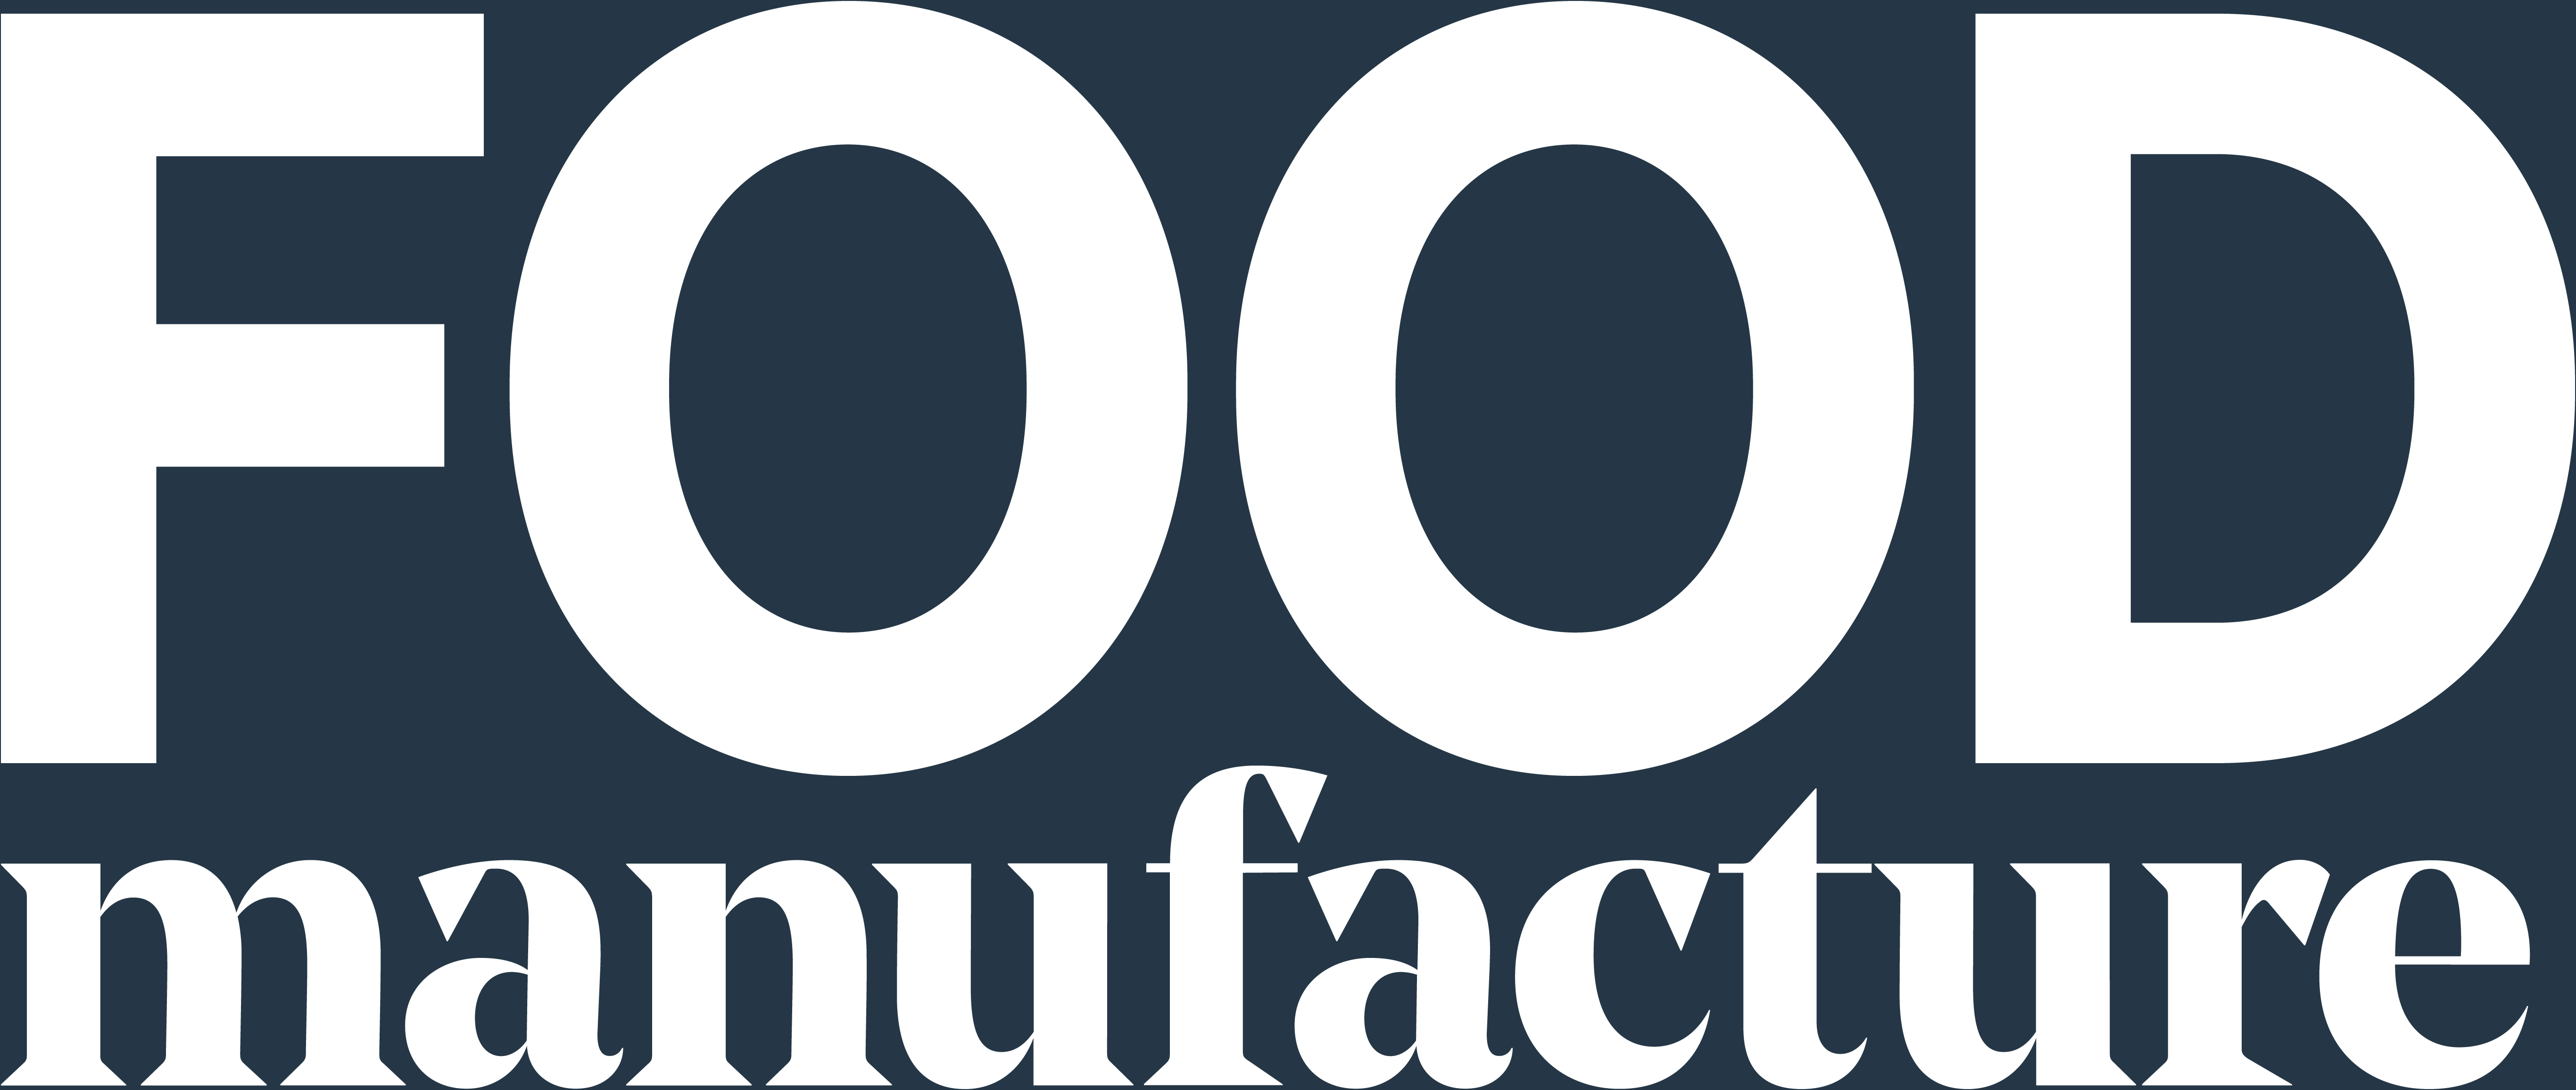 American Food Manufacturer Logo - IFE 2019 to IFE